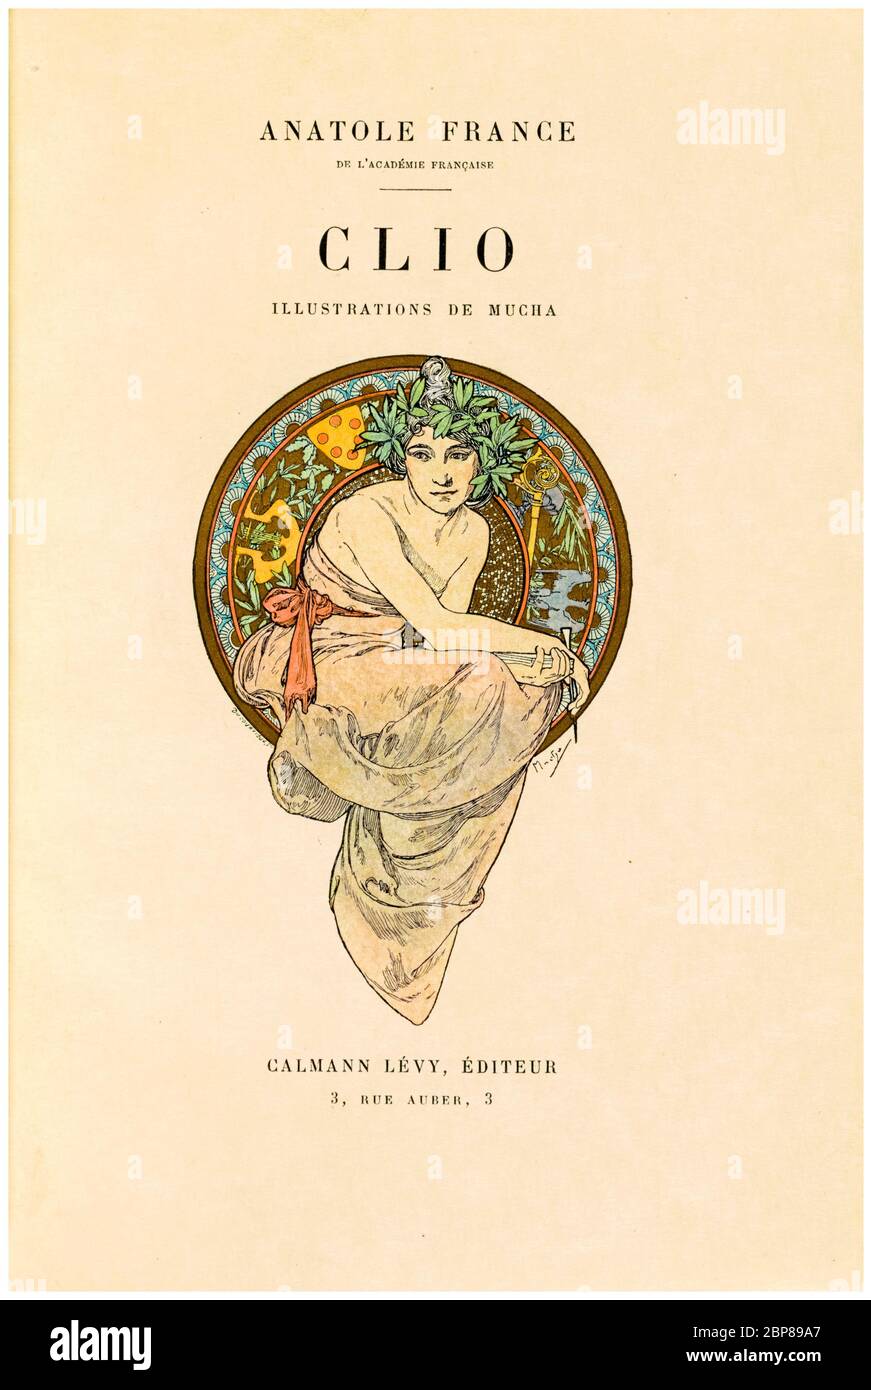 Alphonse Mucha, Anatole France (Autor), Clio, Frontispiz, Jugendstil, Illustration, 1900 Stockfoto